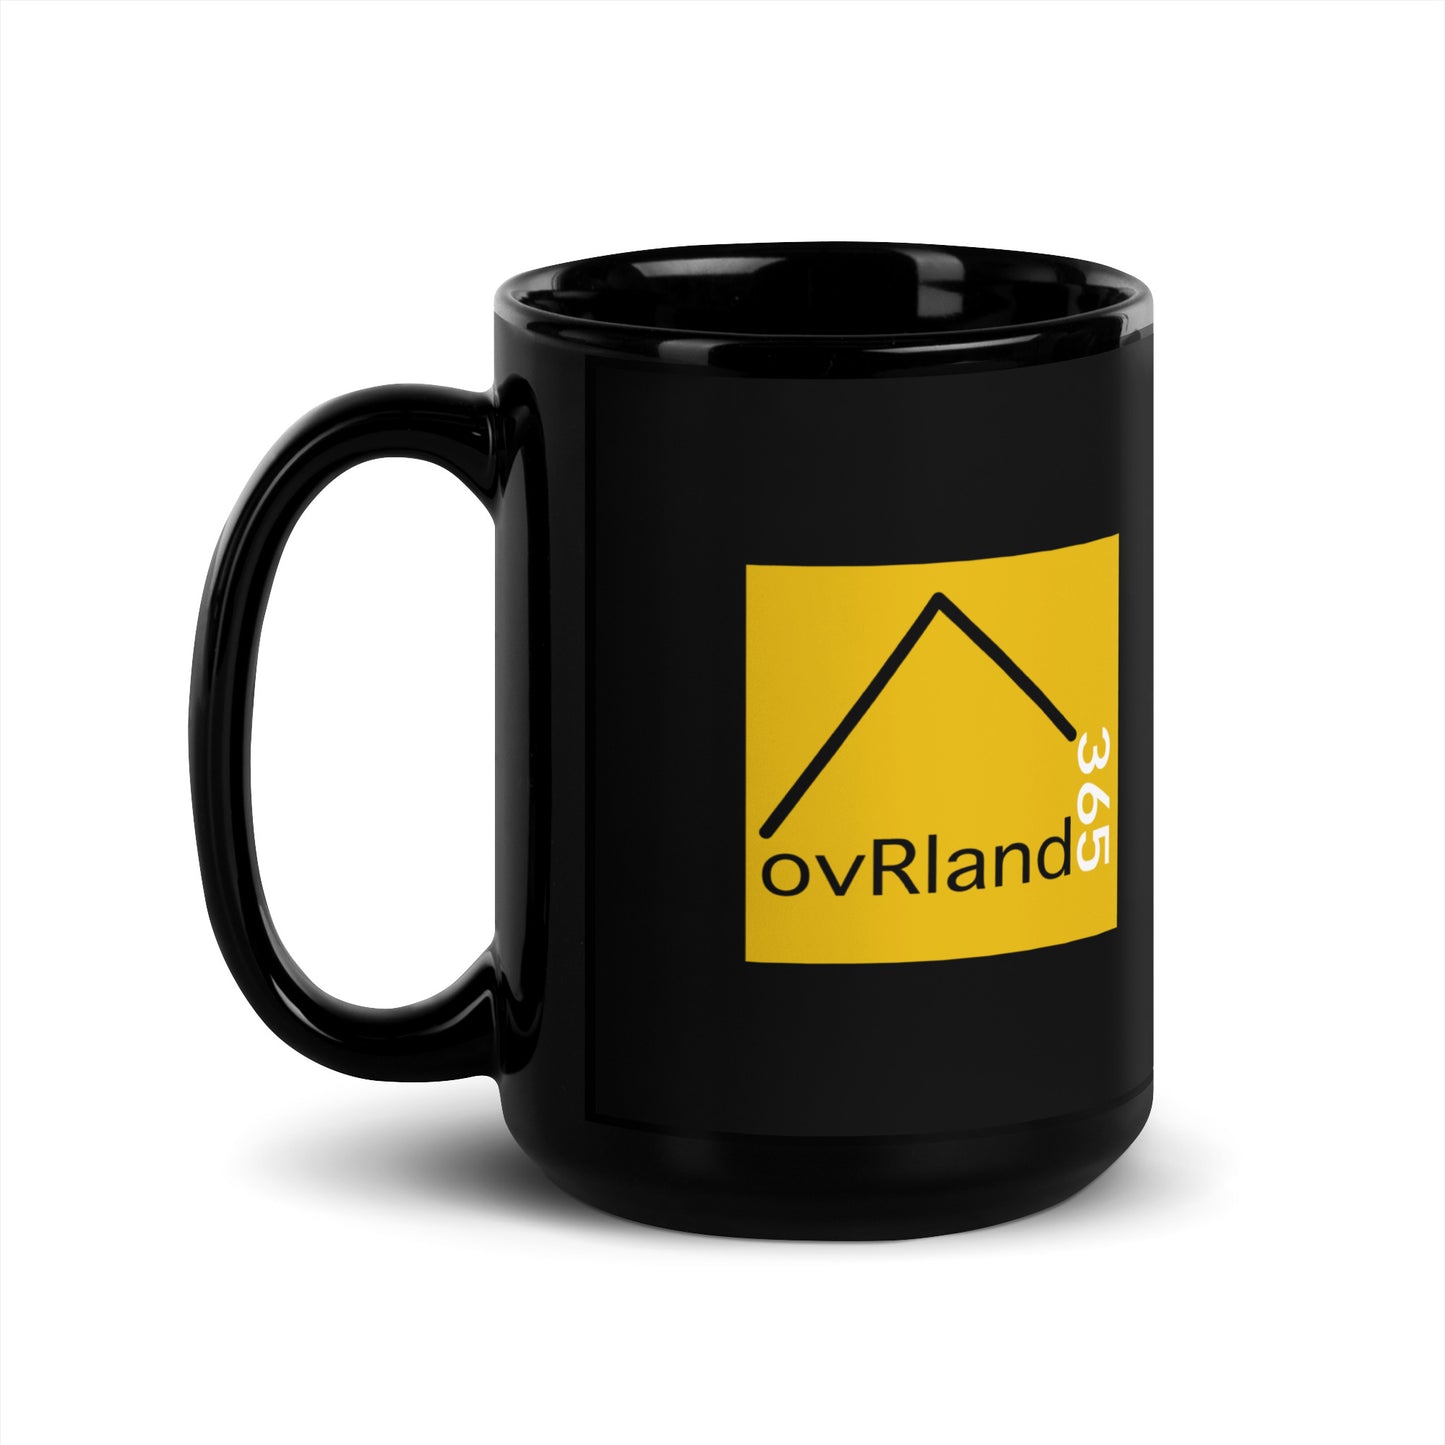 Get Dirty. Go broke. Overland. - 15oz Coffee Mug. ovRland365 logo side. overland365.com